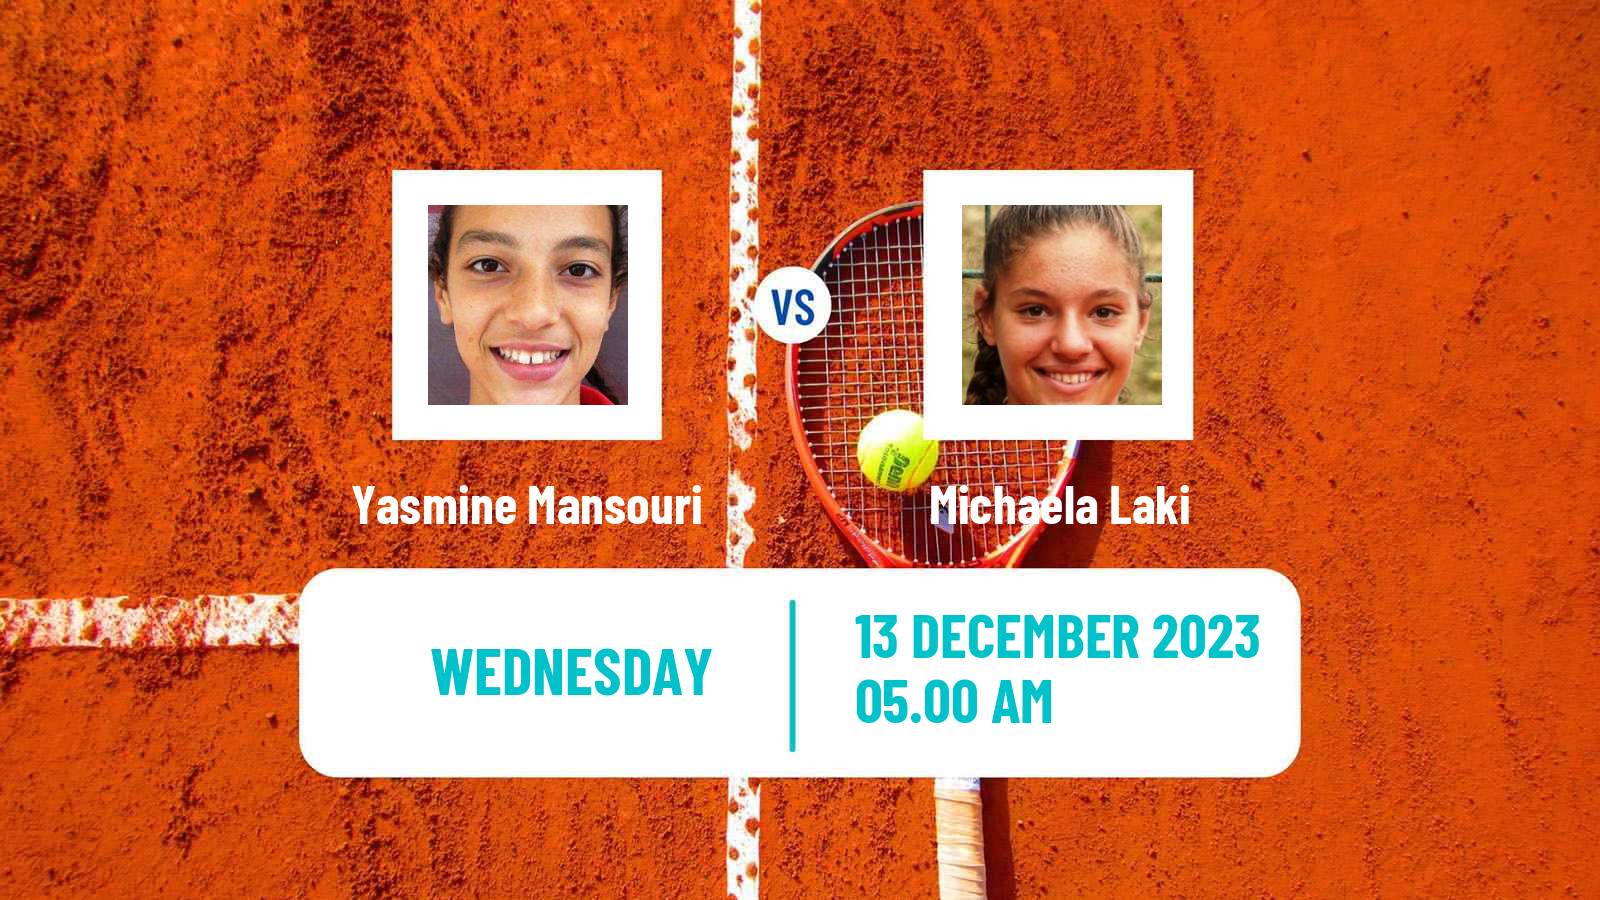 Tennis ITF W25 Monastir 6 Women Yasmine Mansouri - Michaela Laki